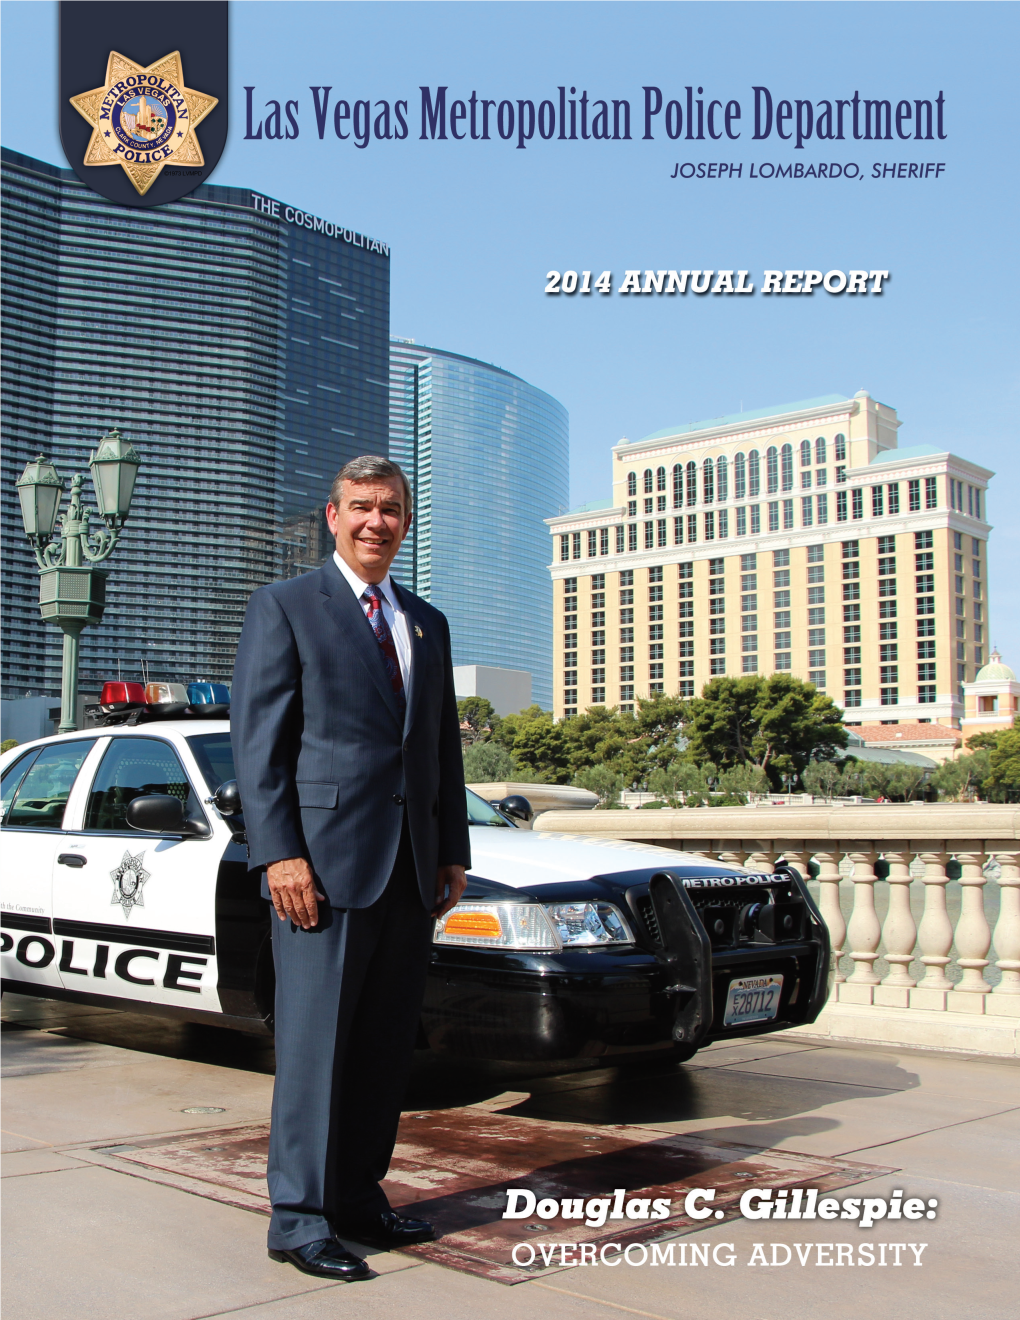 Las Vegas Metropolitan Police Department Met Its Share of Challenges in 2014